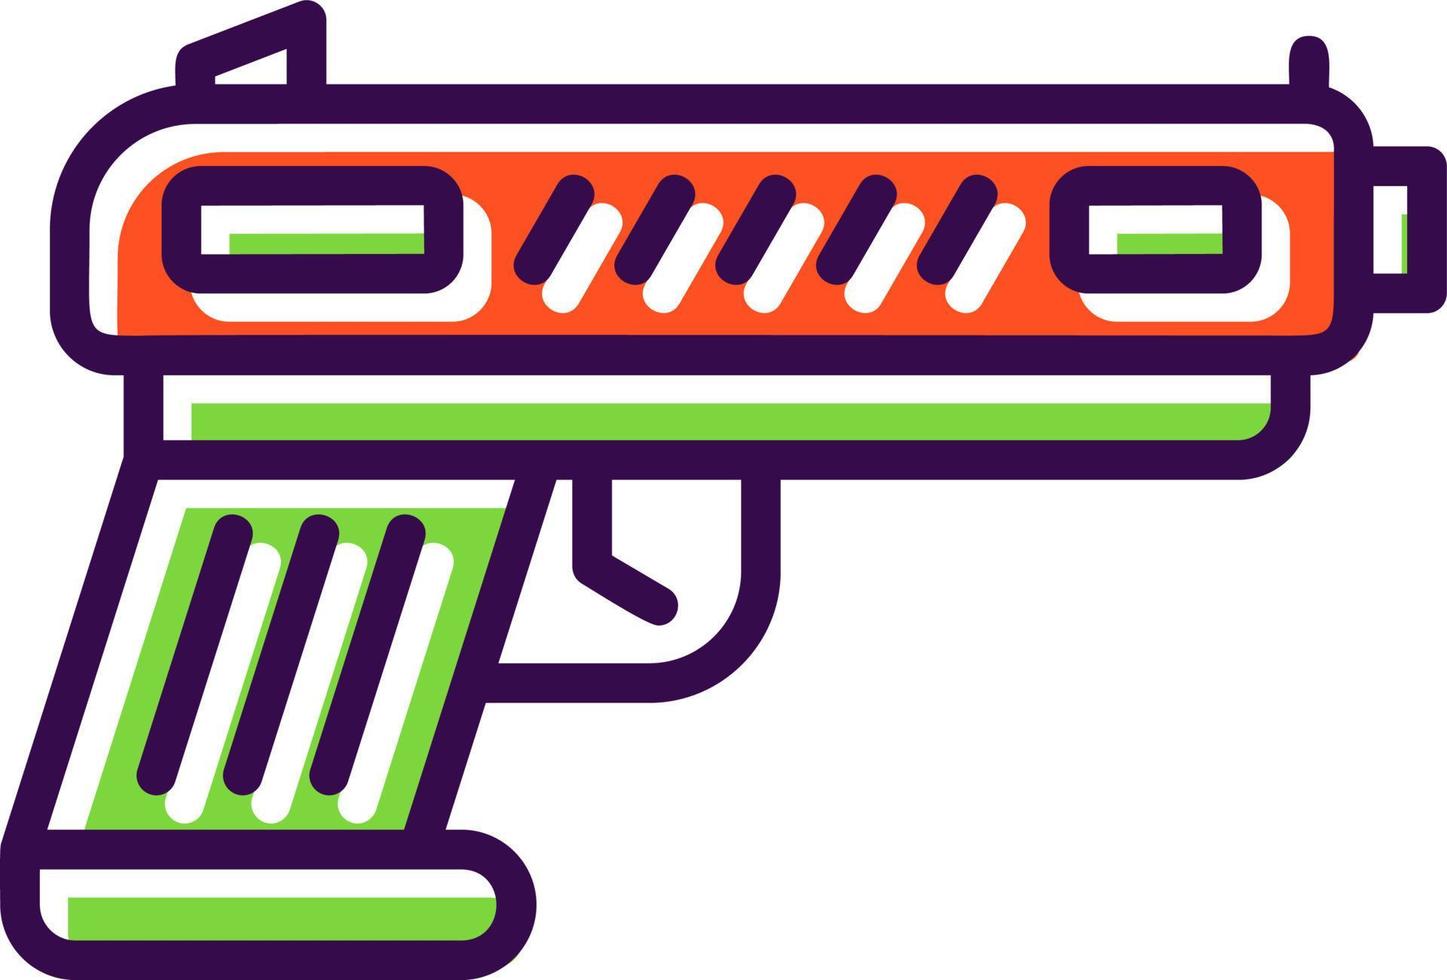 pistola vettore icona design